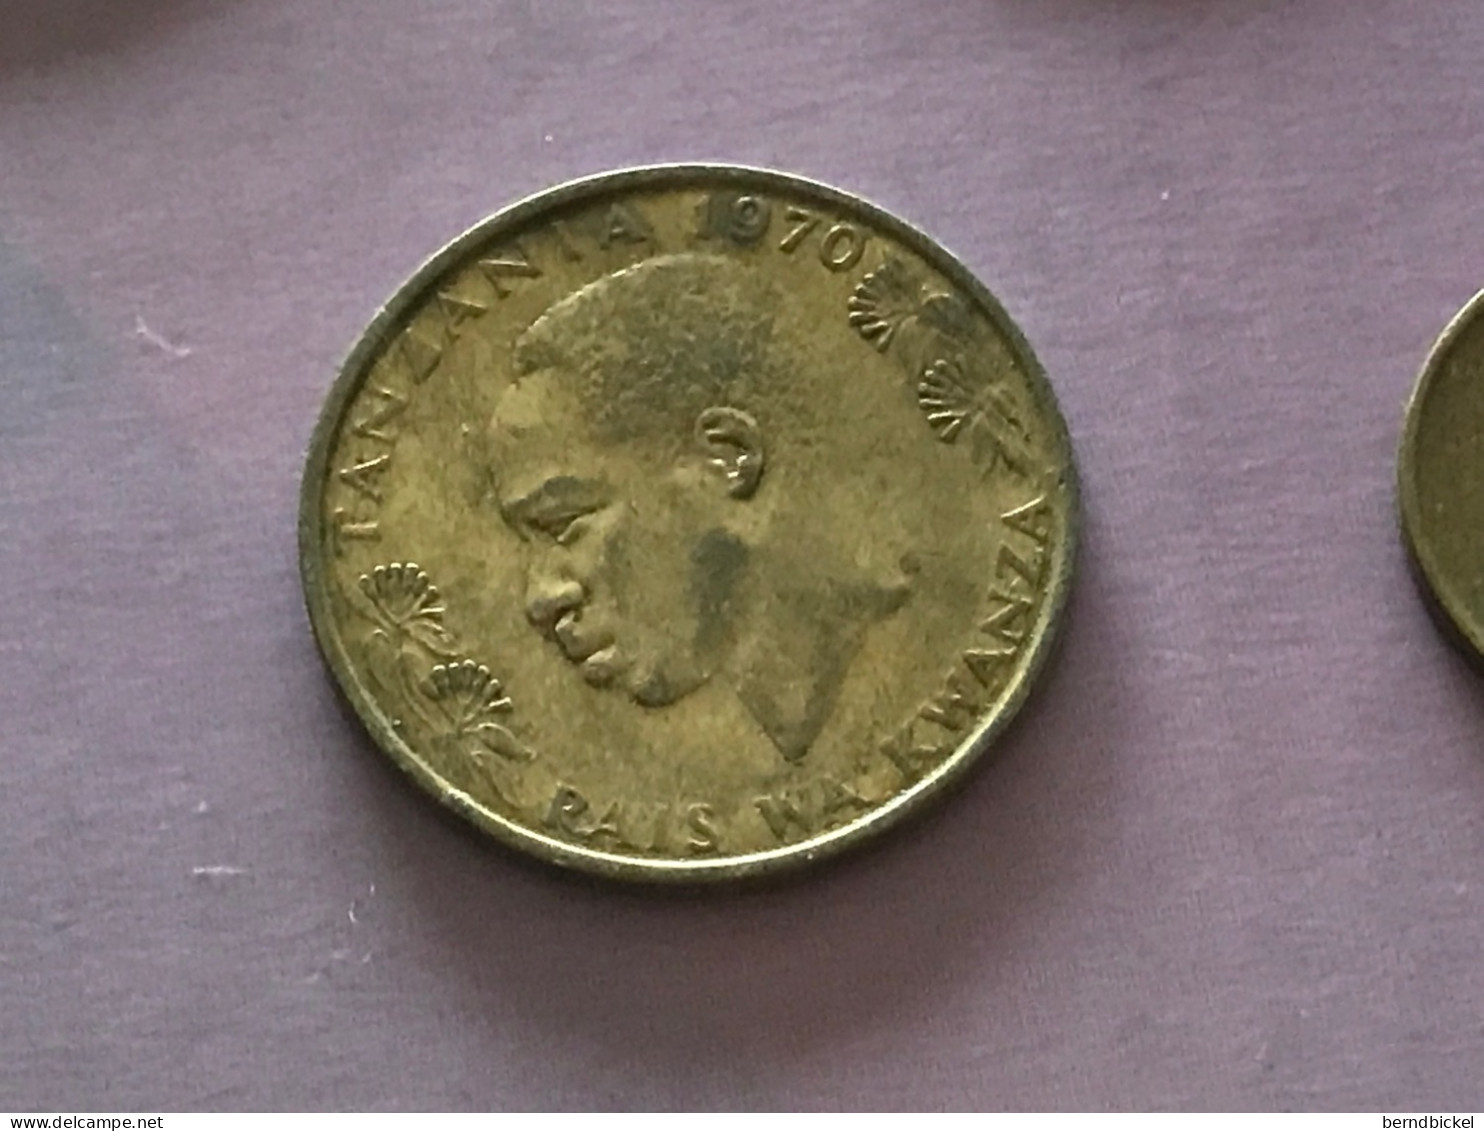 Münze Münzen Umlaufmünze Tansania 20 Cent 1970 - Tansania